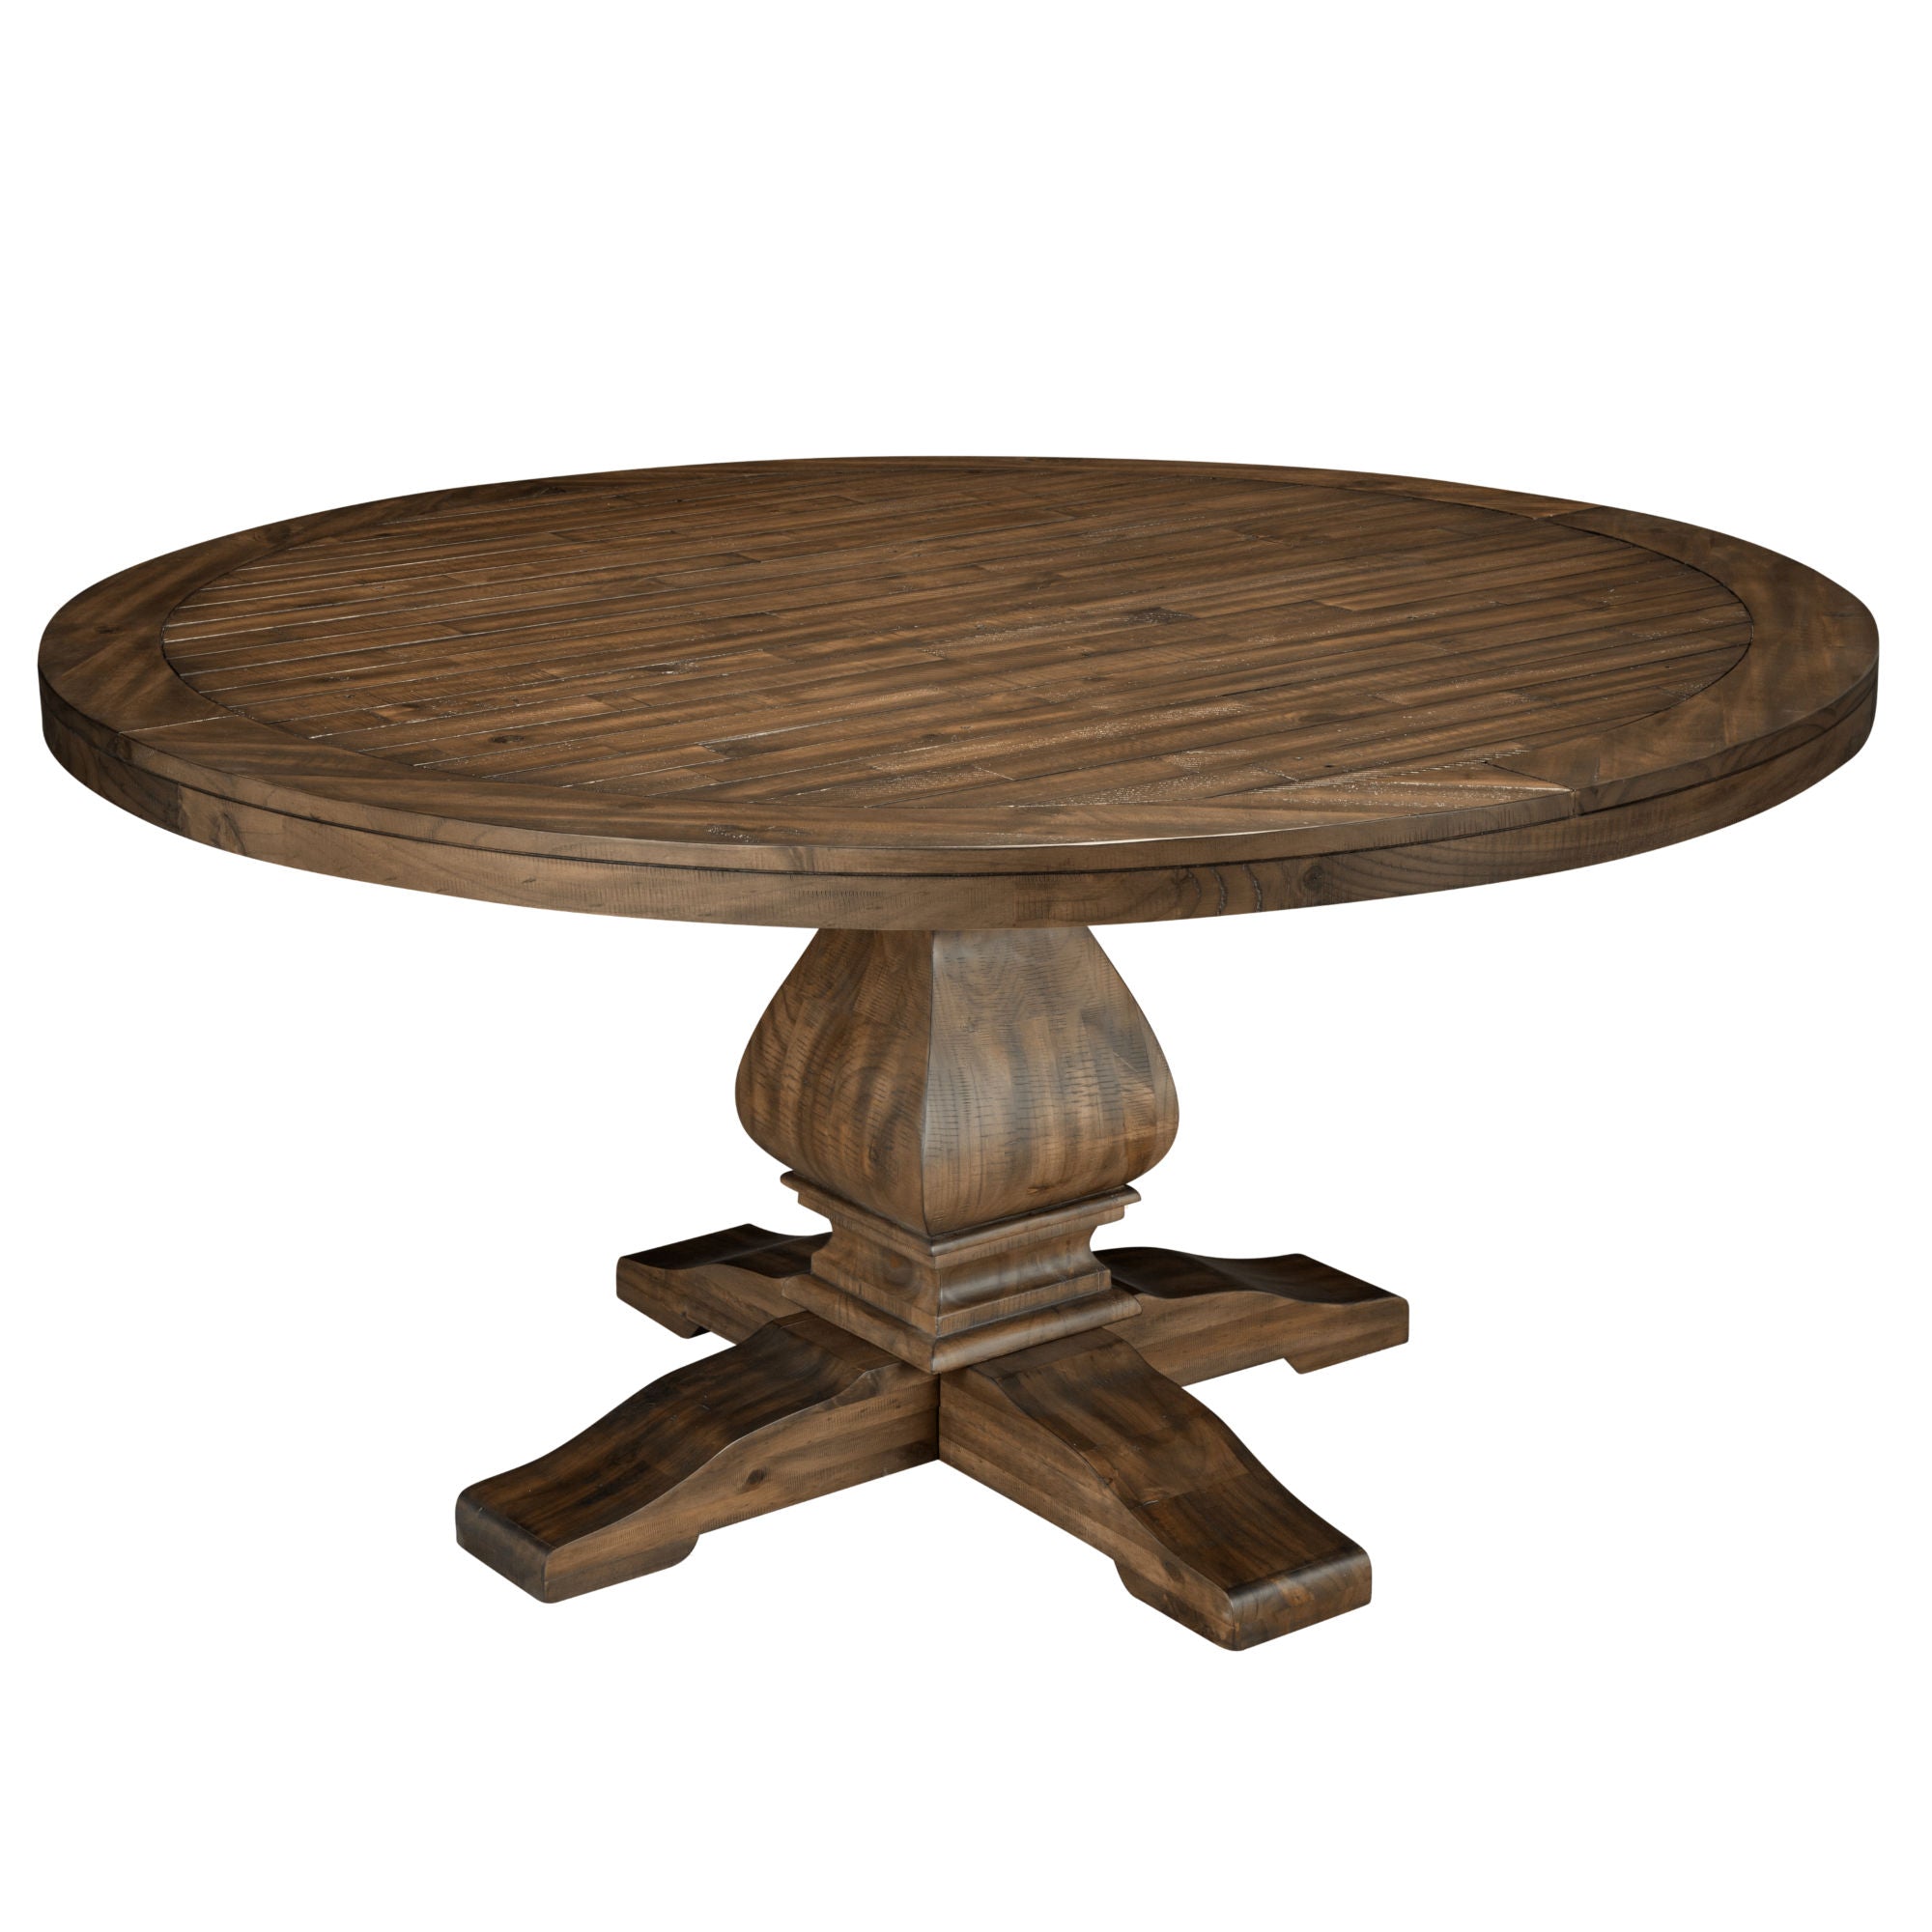 Kensington 60" Round Solid Wood Dining Table - Walnut Finish